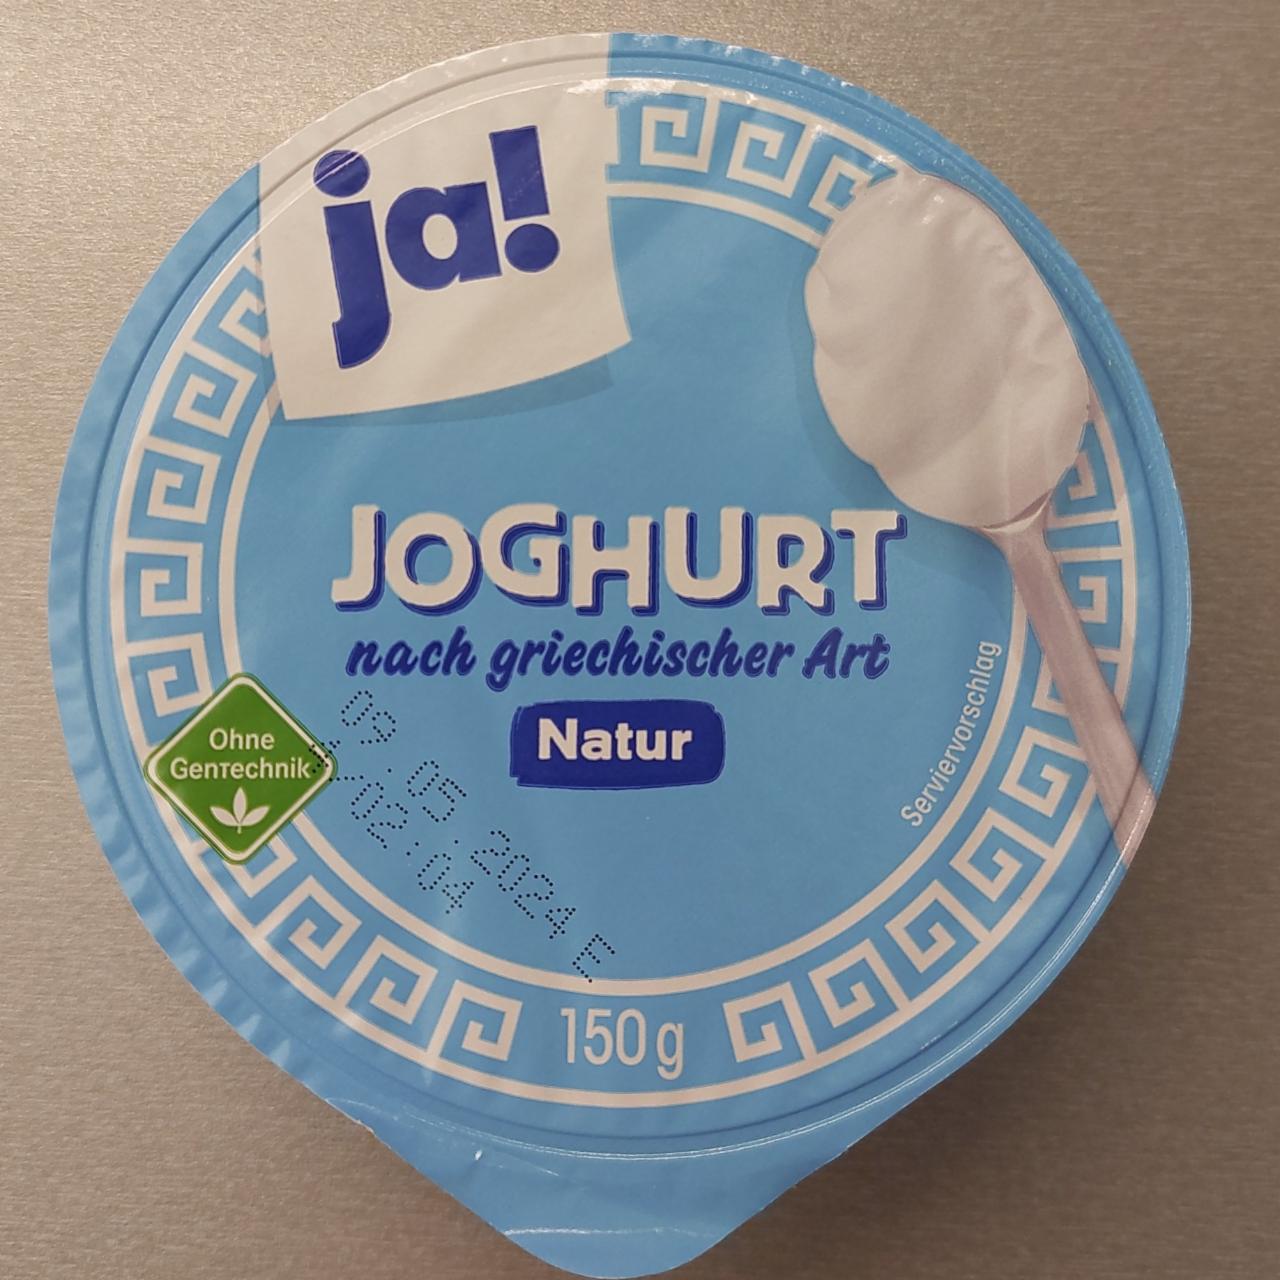 Fotografie - Joghurt nach griechischer Art Natur Ja!